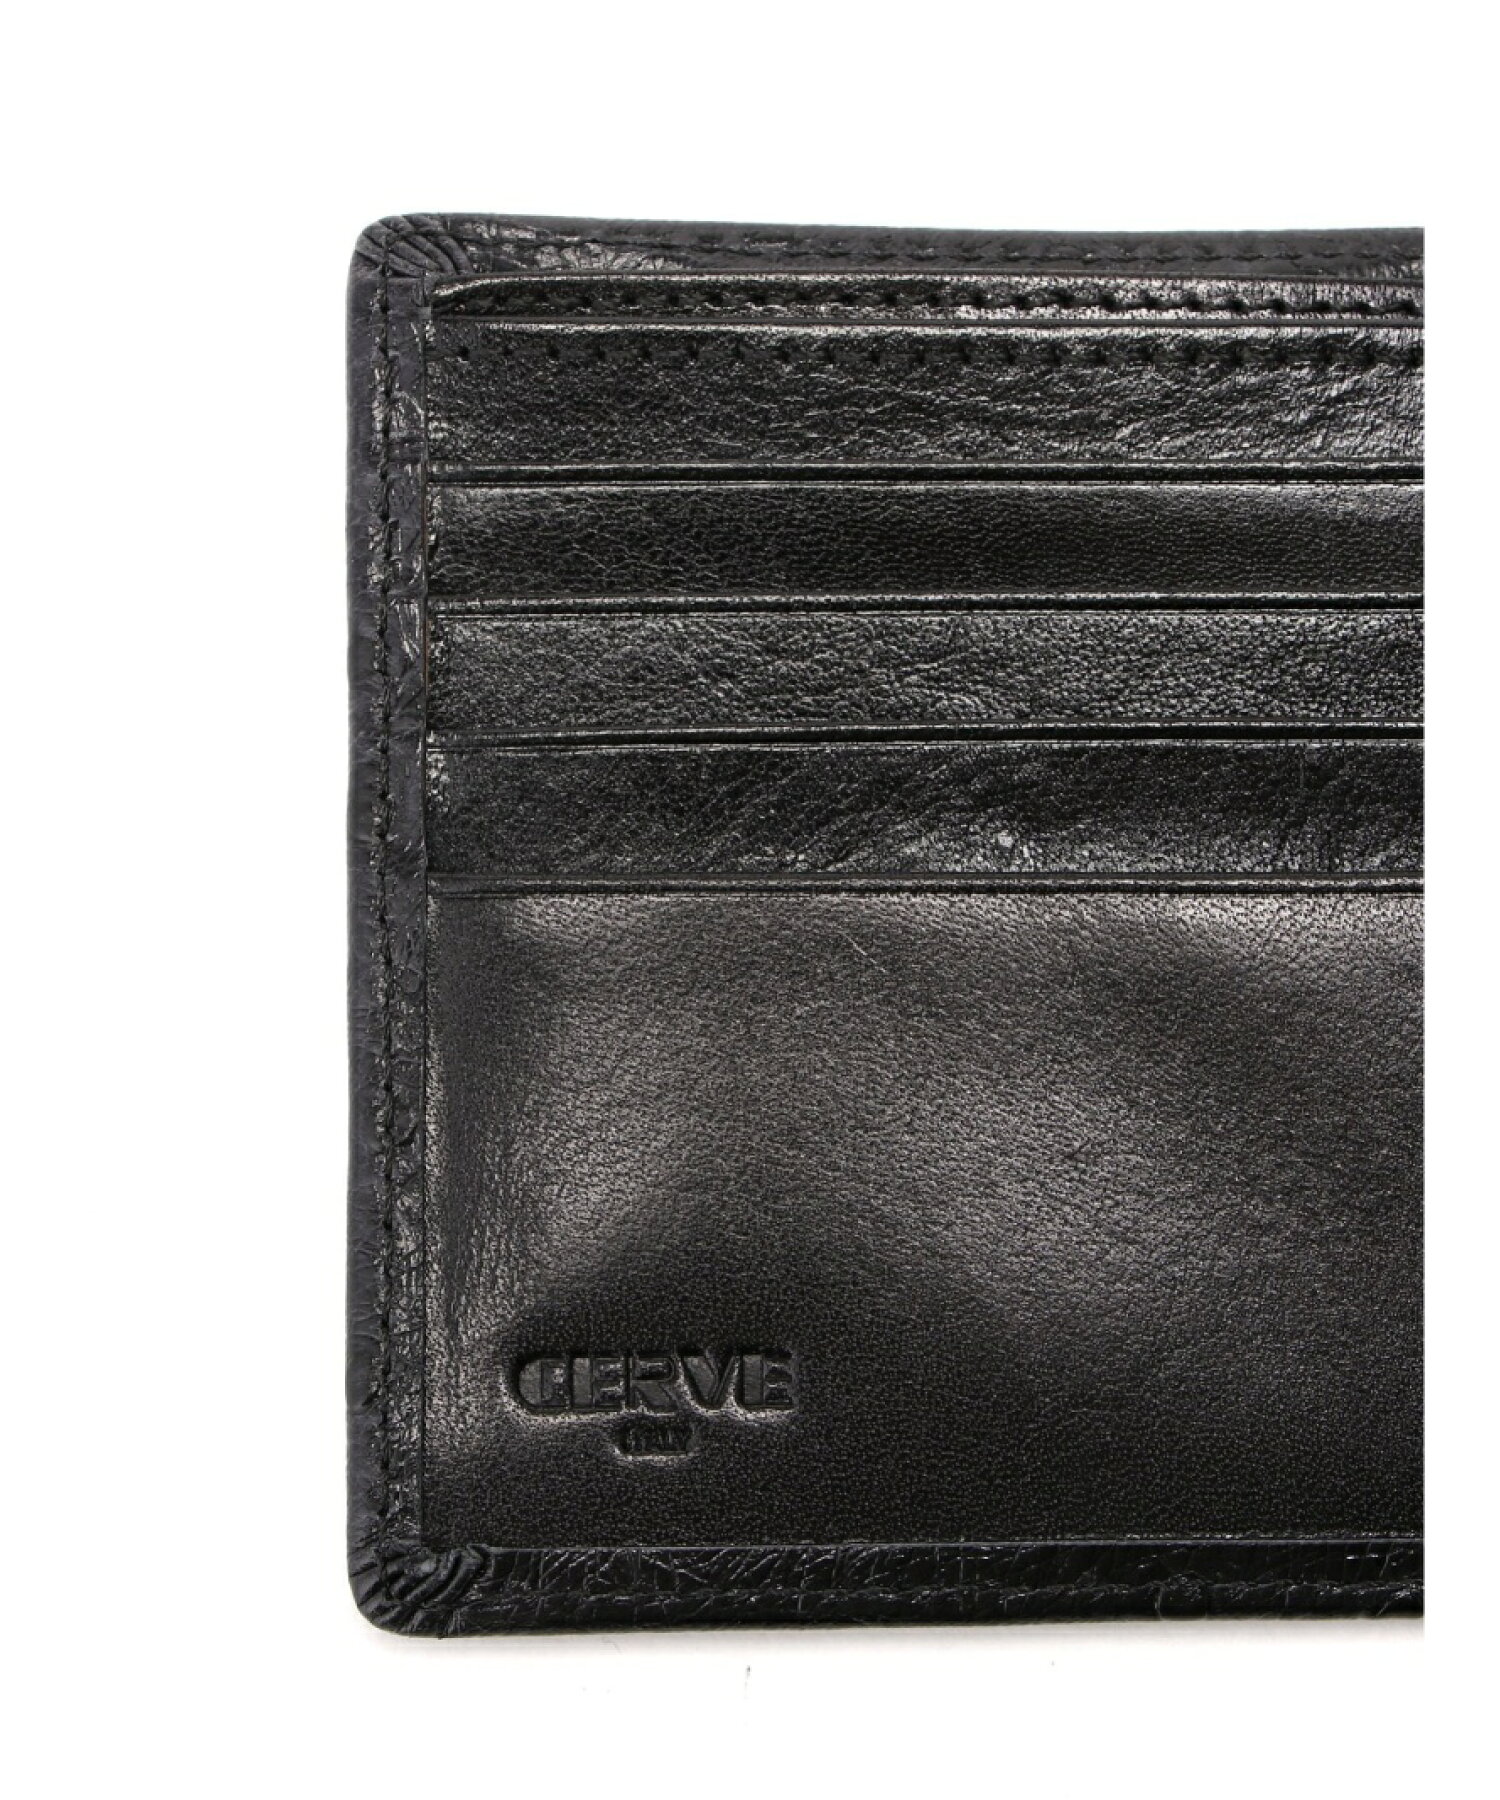 CERVE/(M)牛革 オストリッチ型押風 二つ折財布